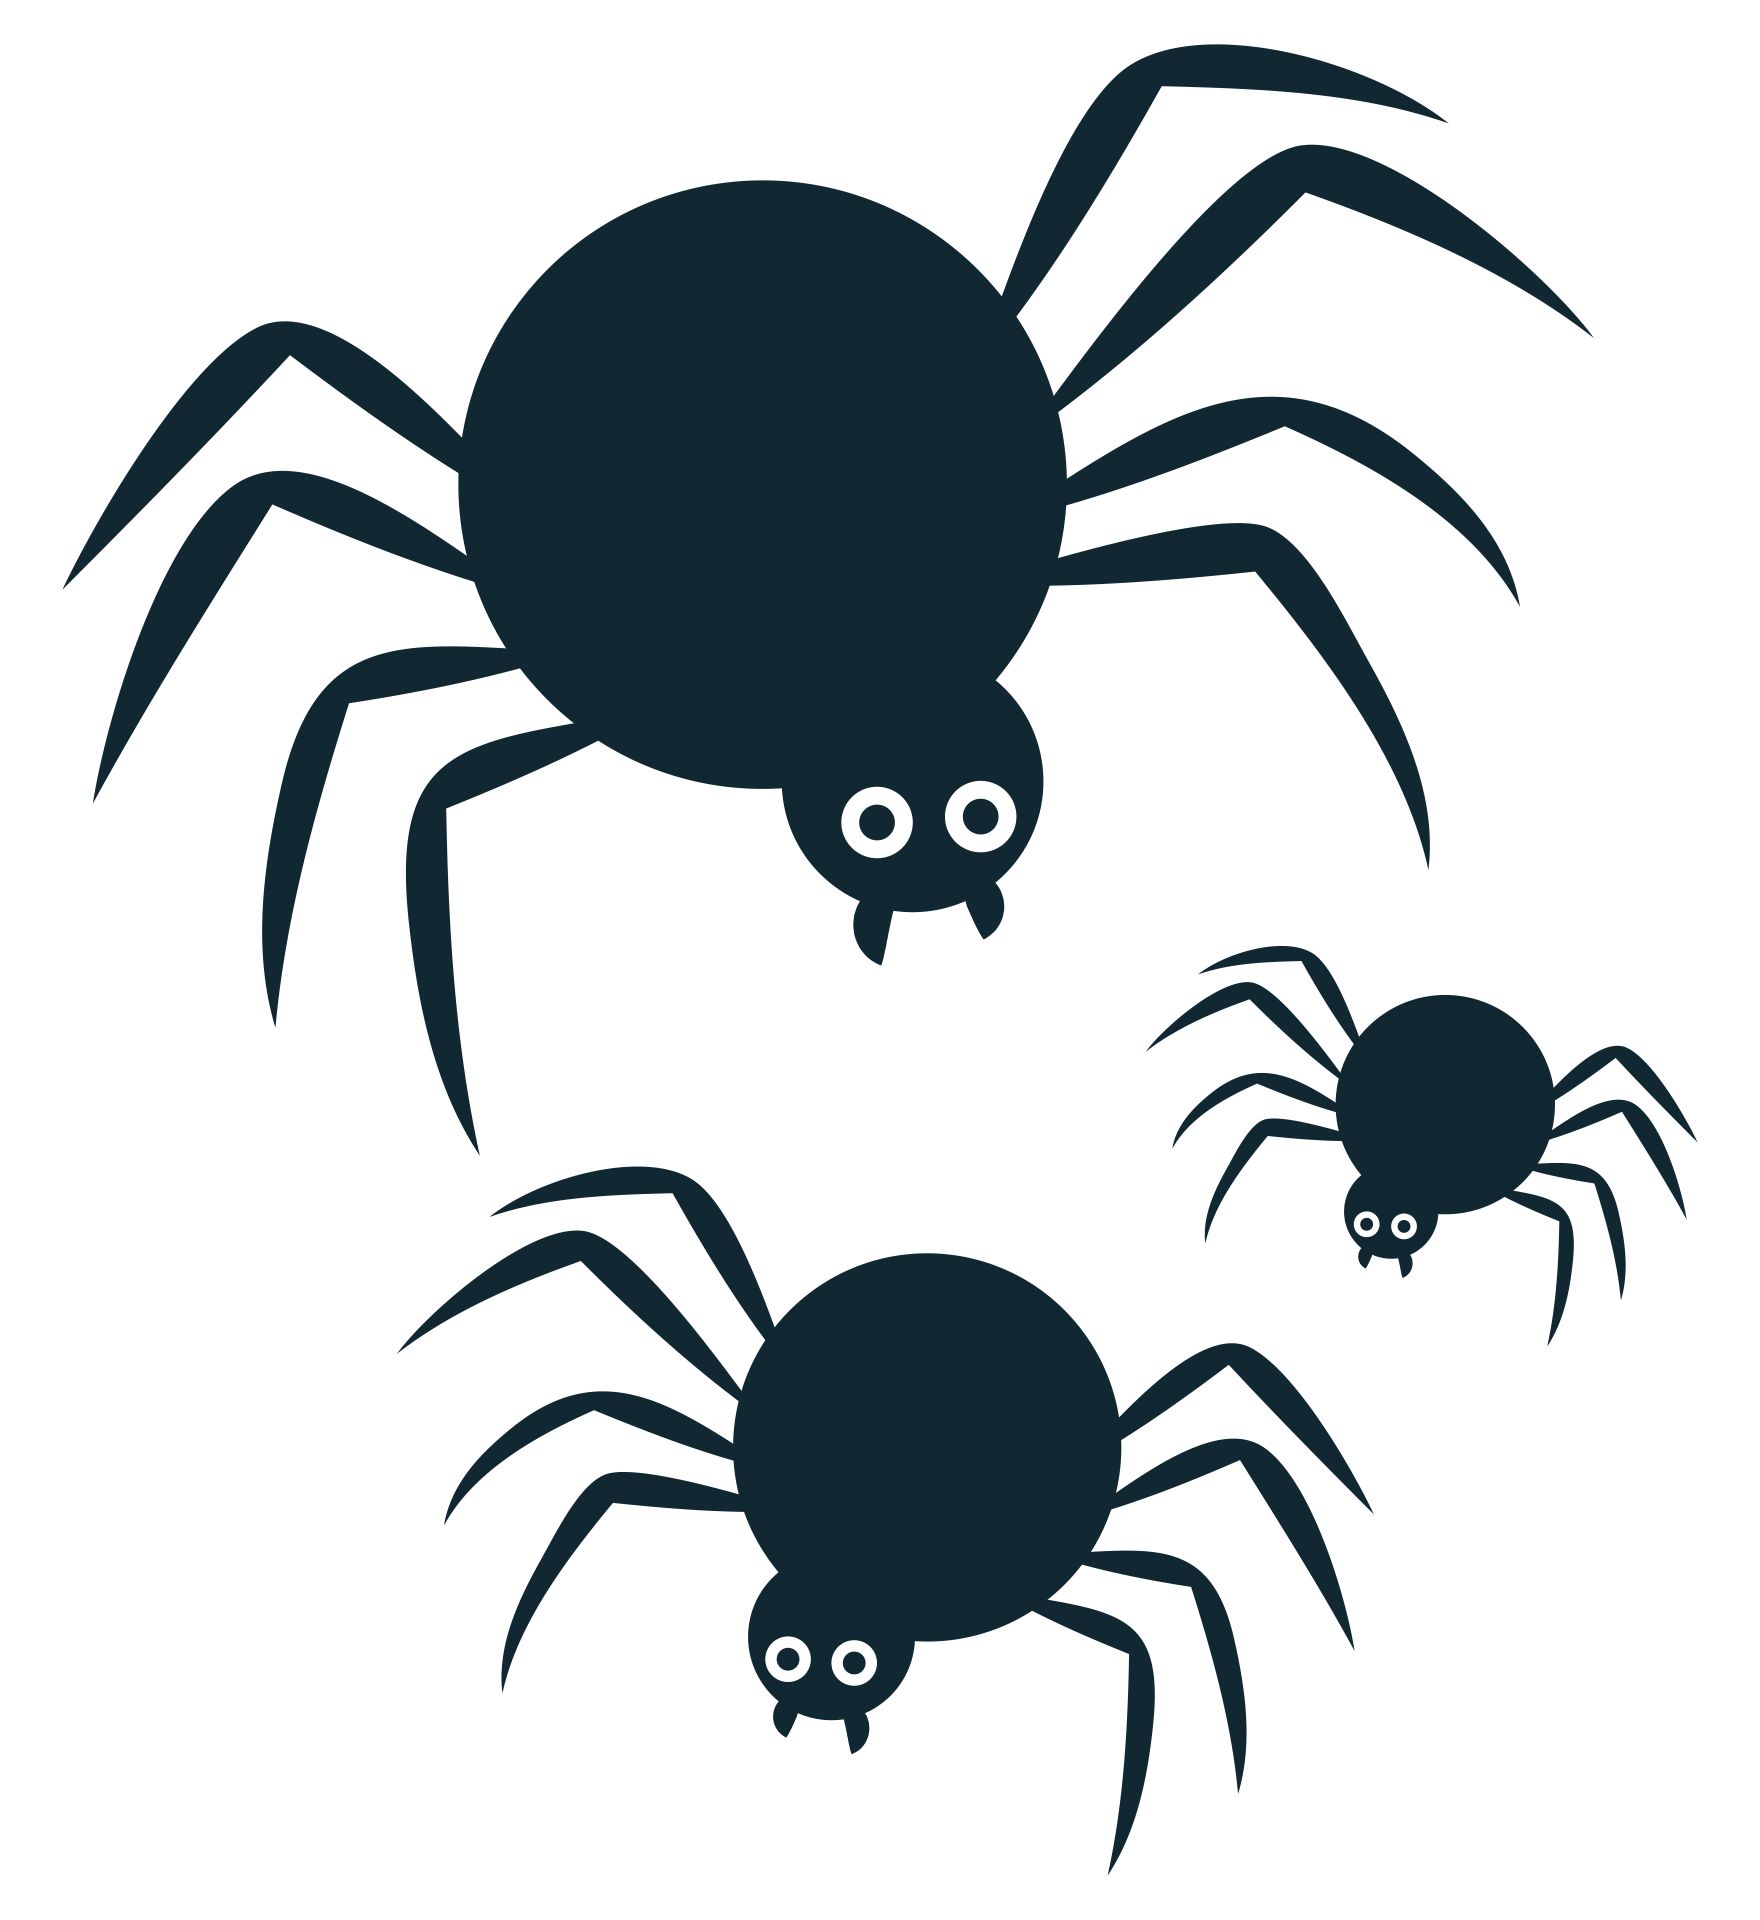 15 Best Spiders For Halloween Printable